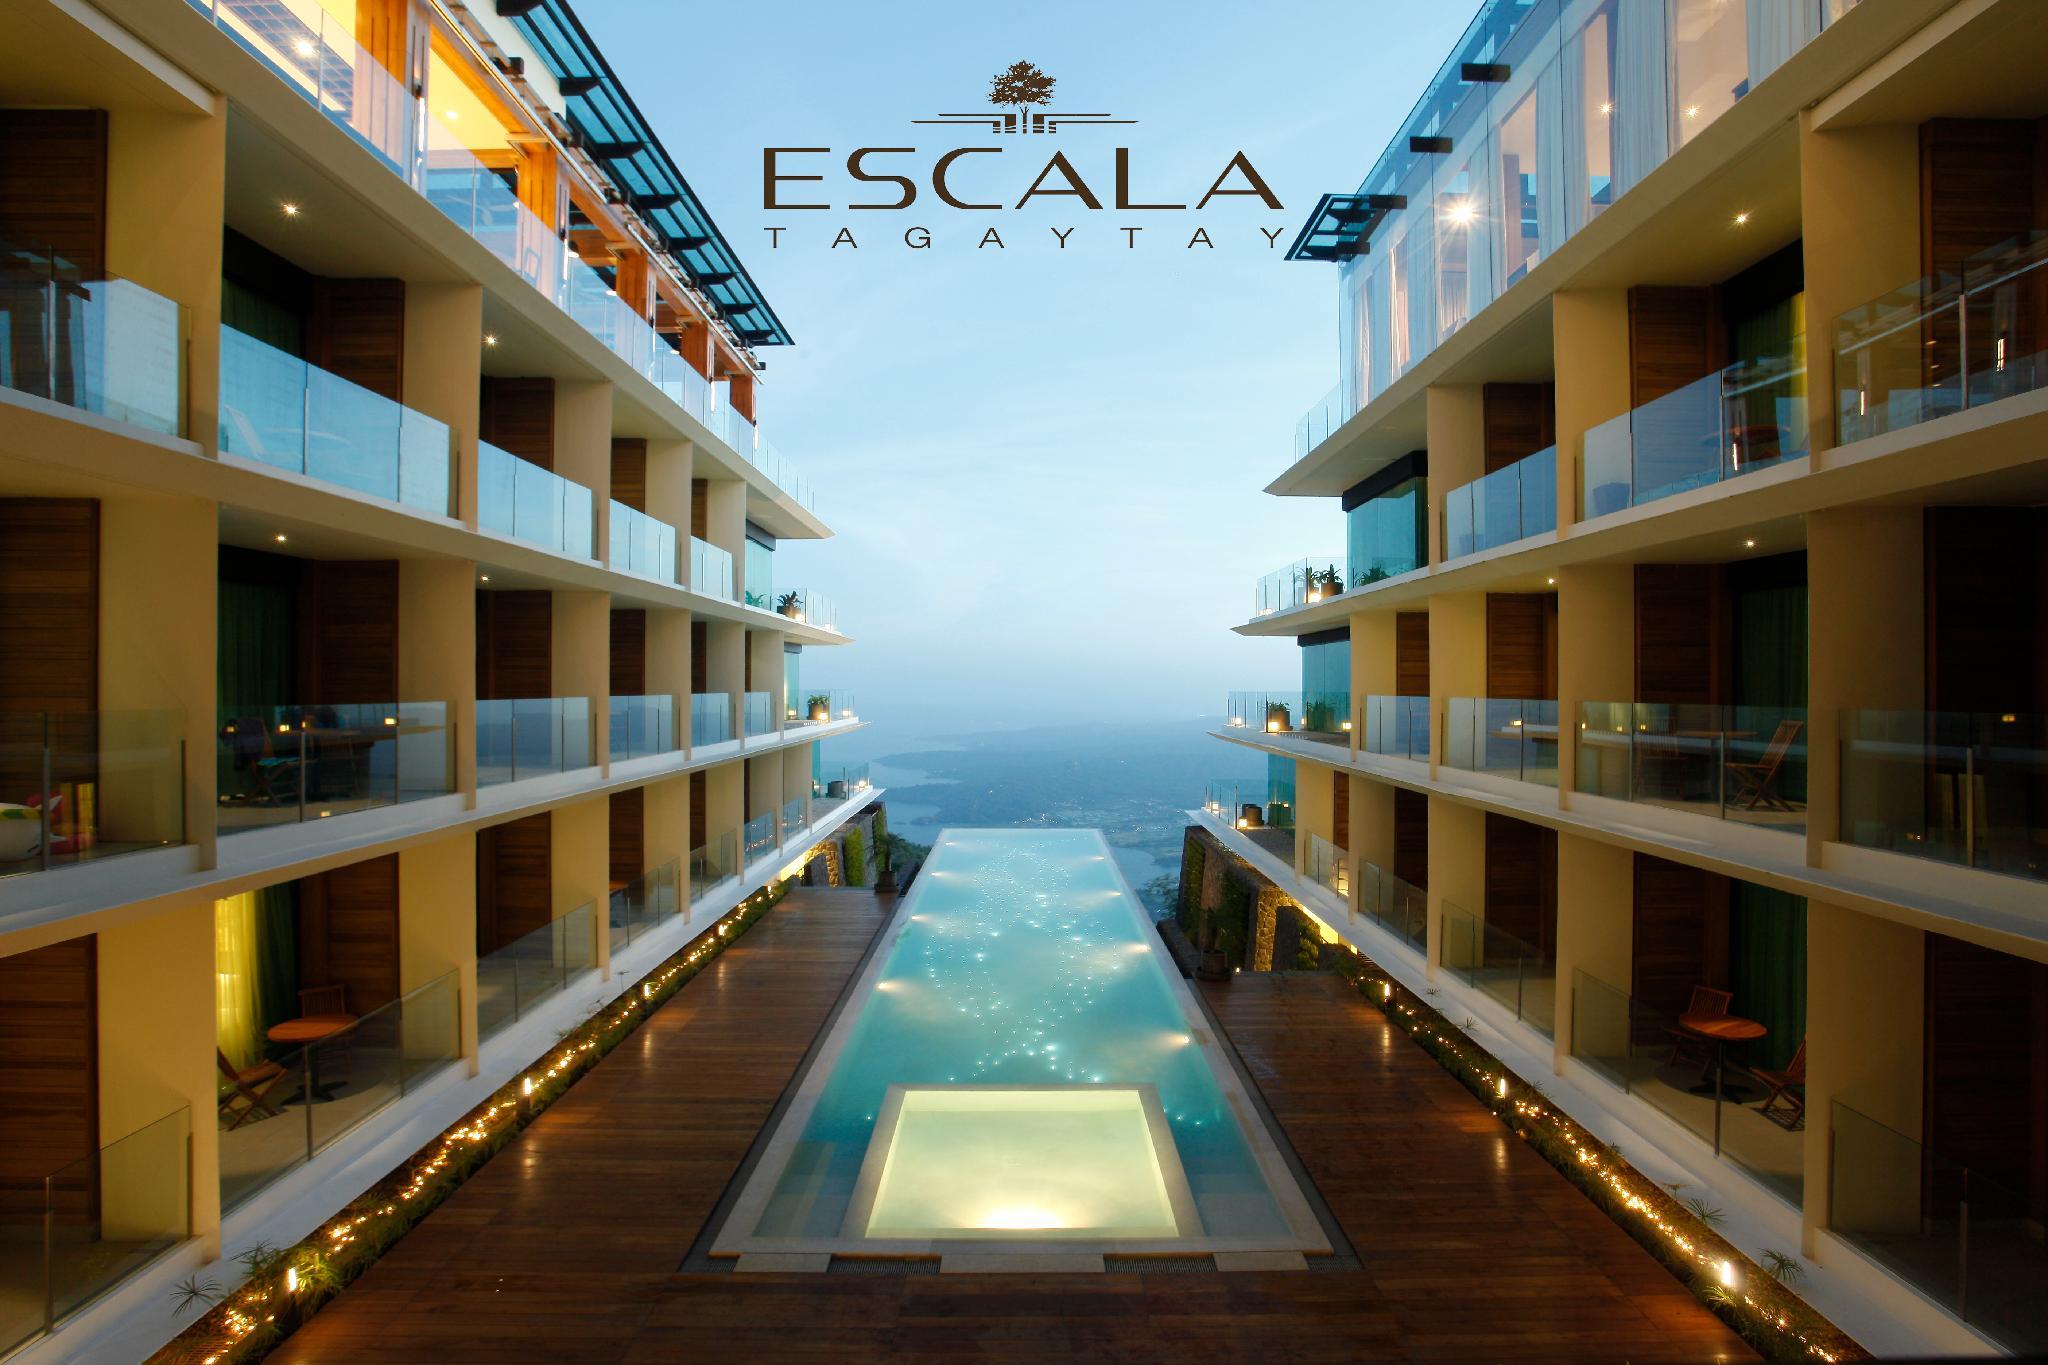 Escala Tagaytay, Tagaytay Hotels with Taal Lake